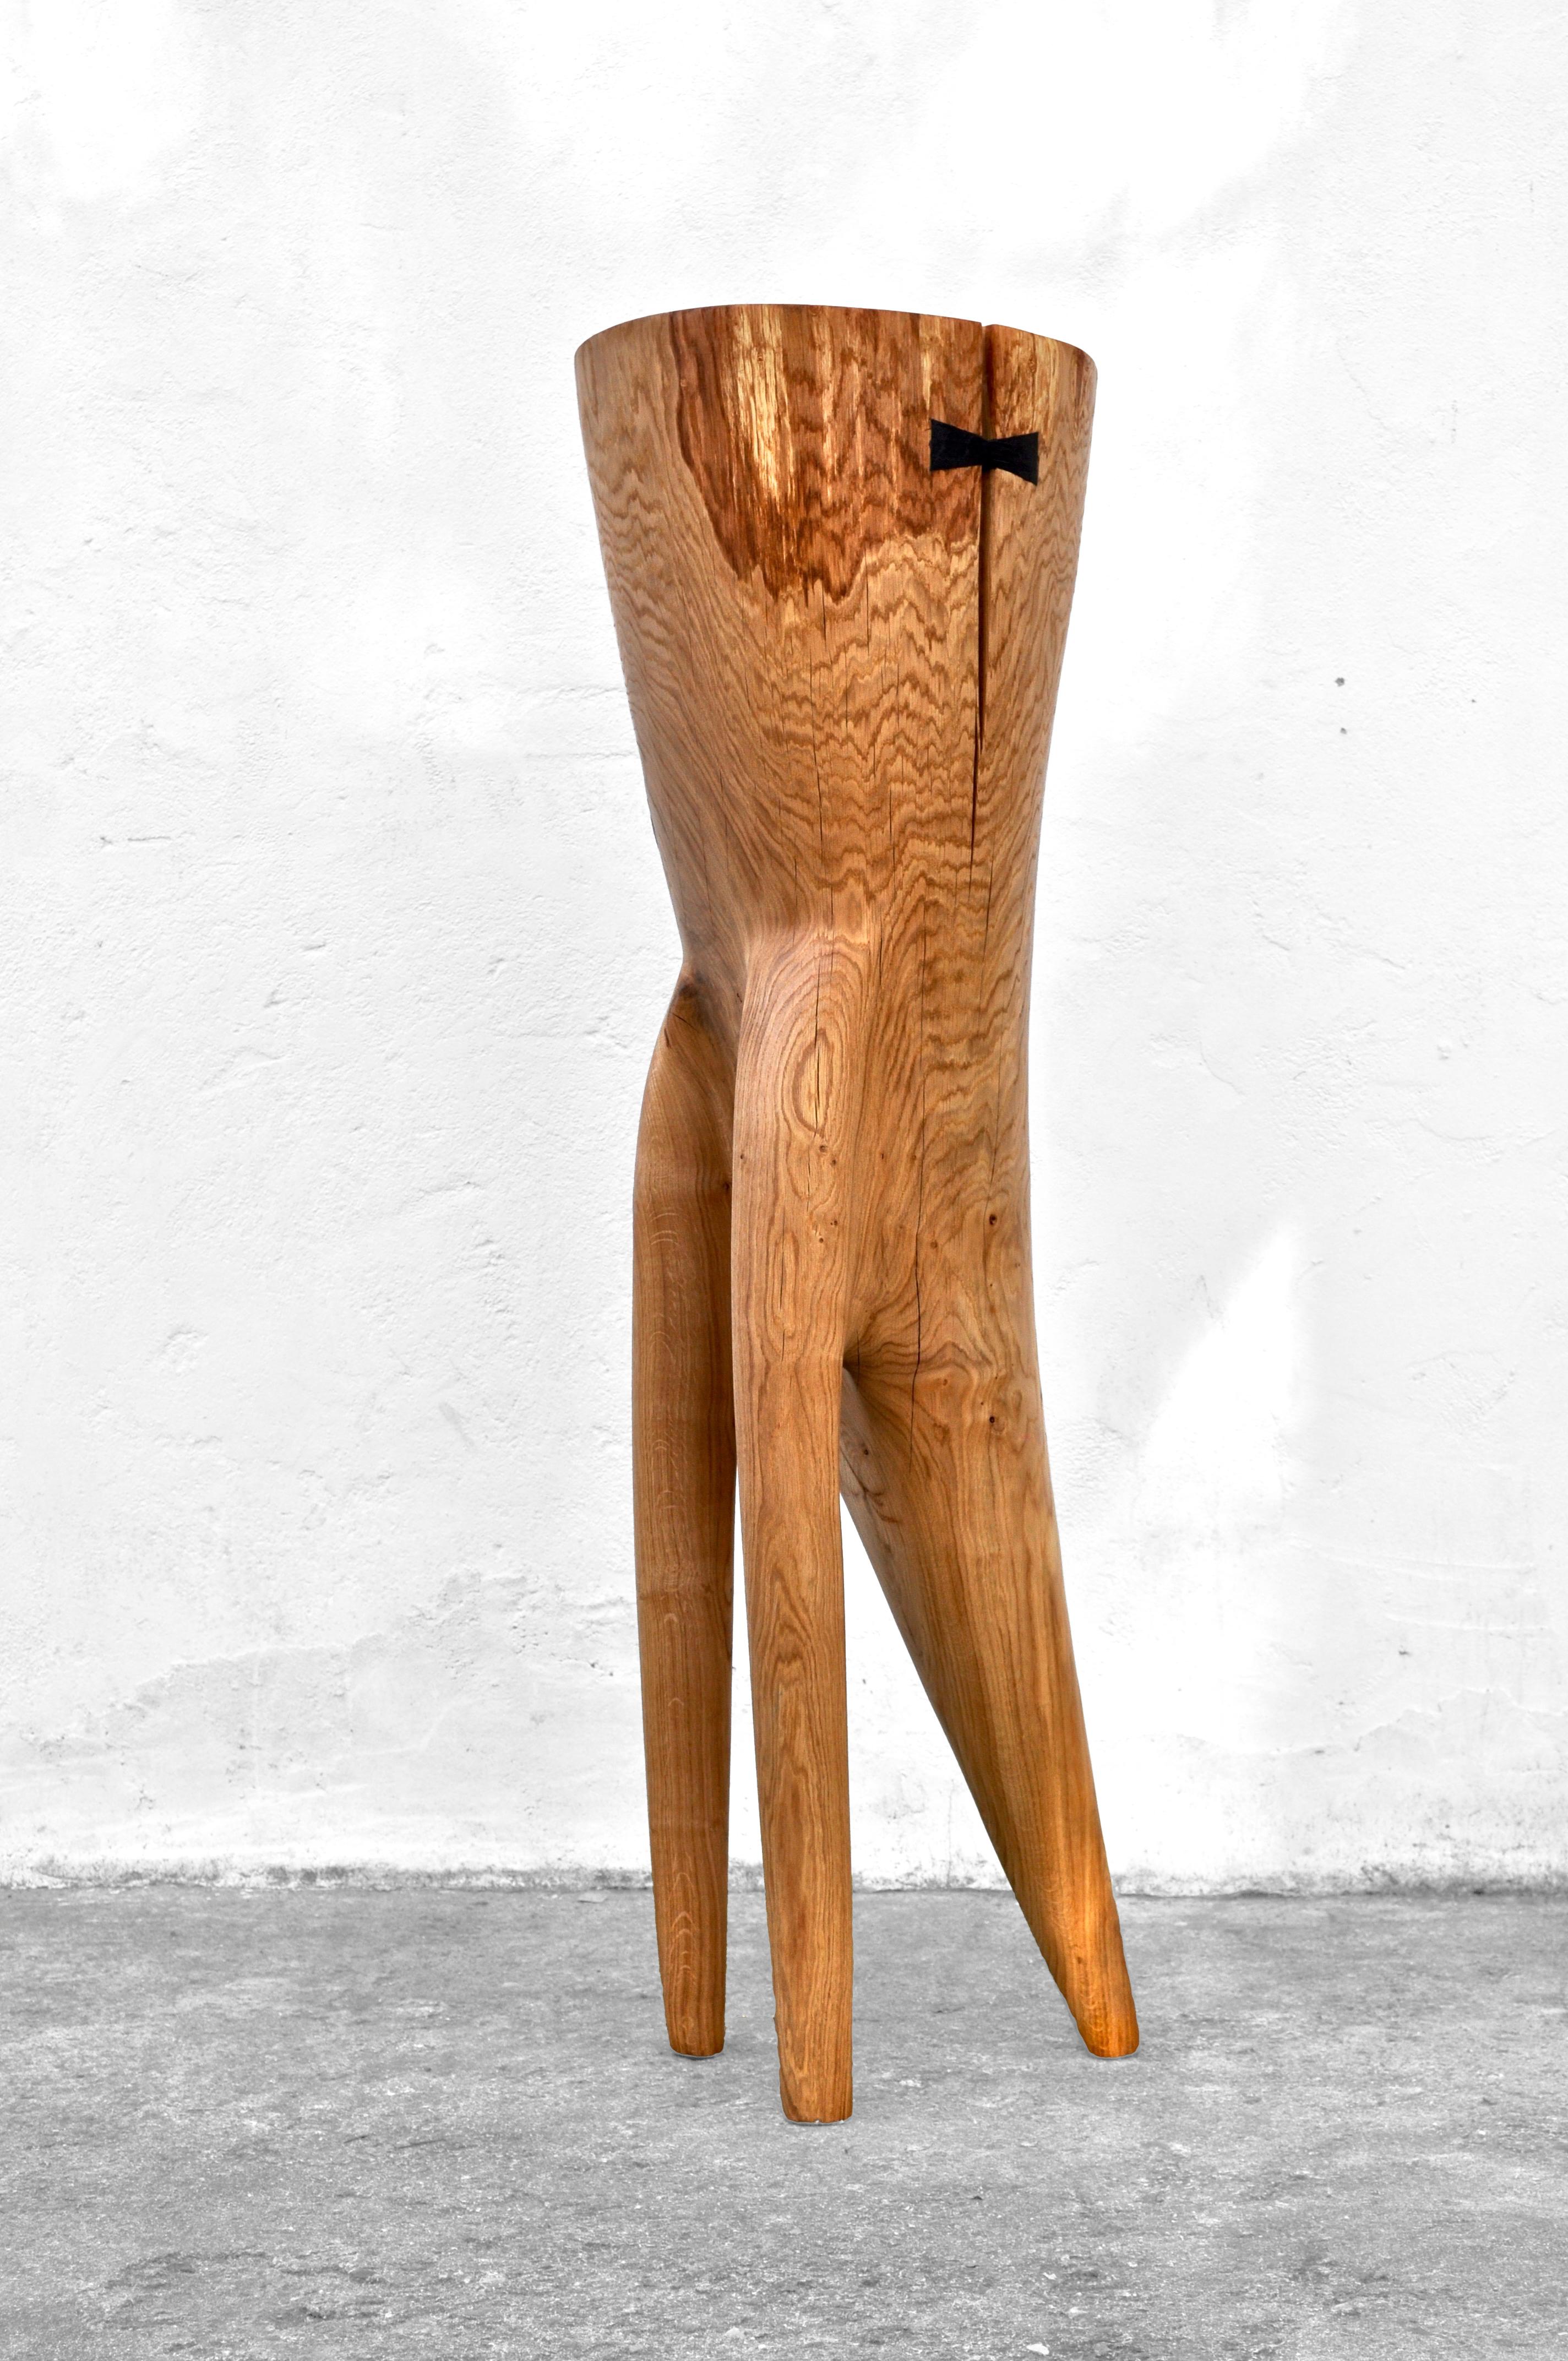 Organic Modern Unique Sculpture Signed by Jörg Pietschmann For Sale